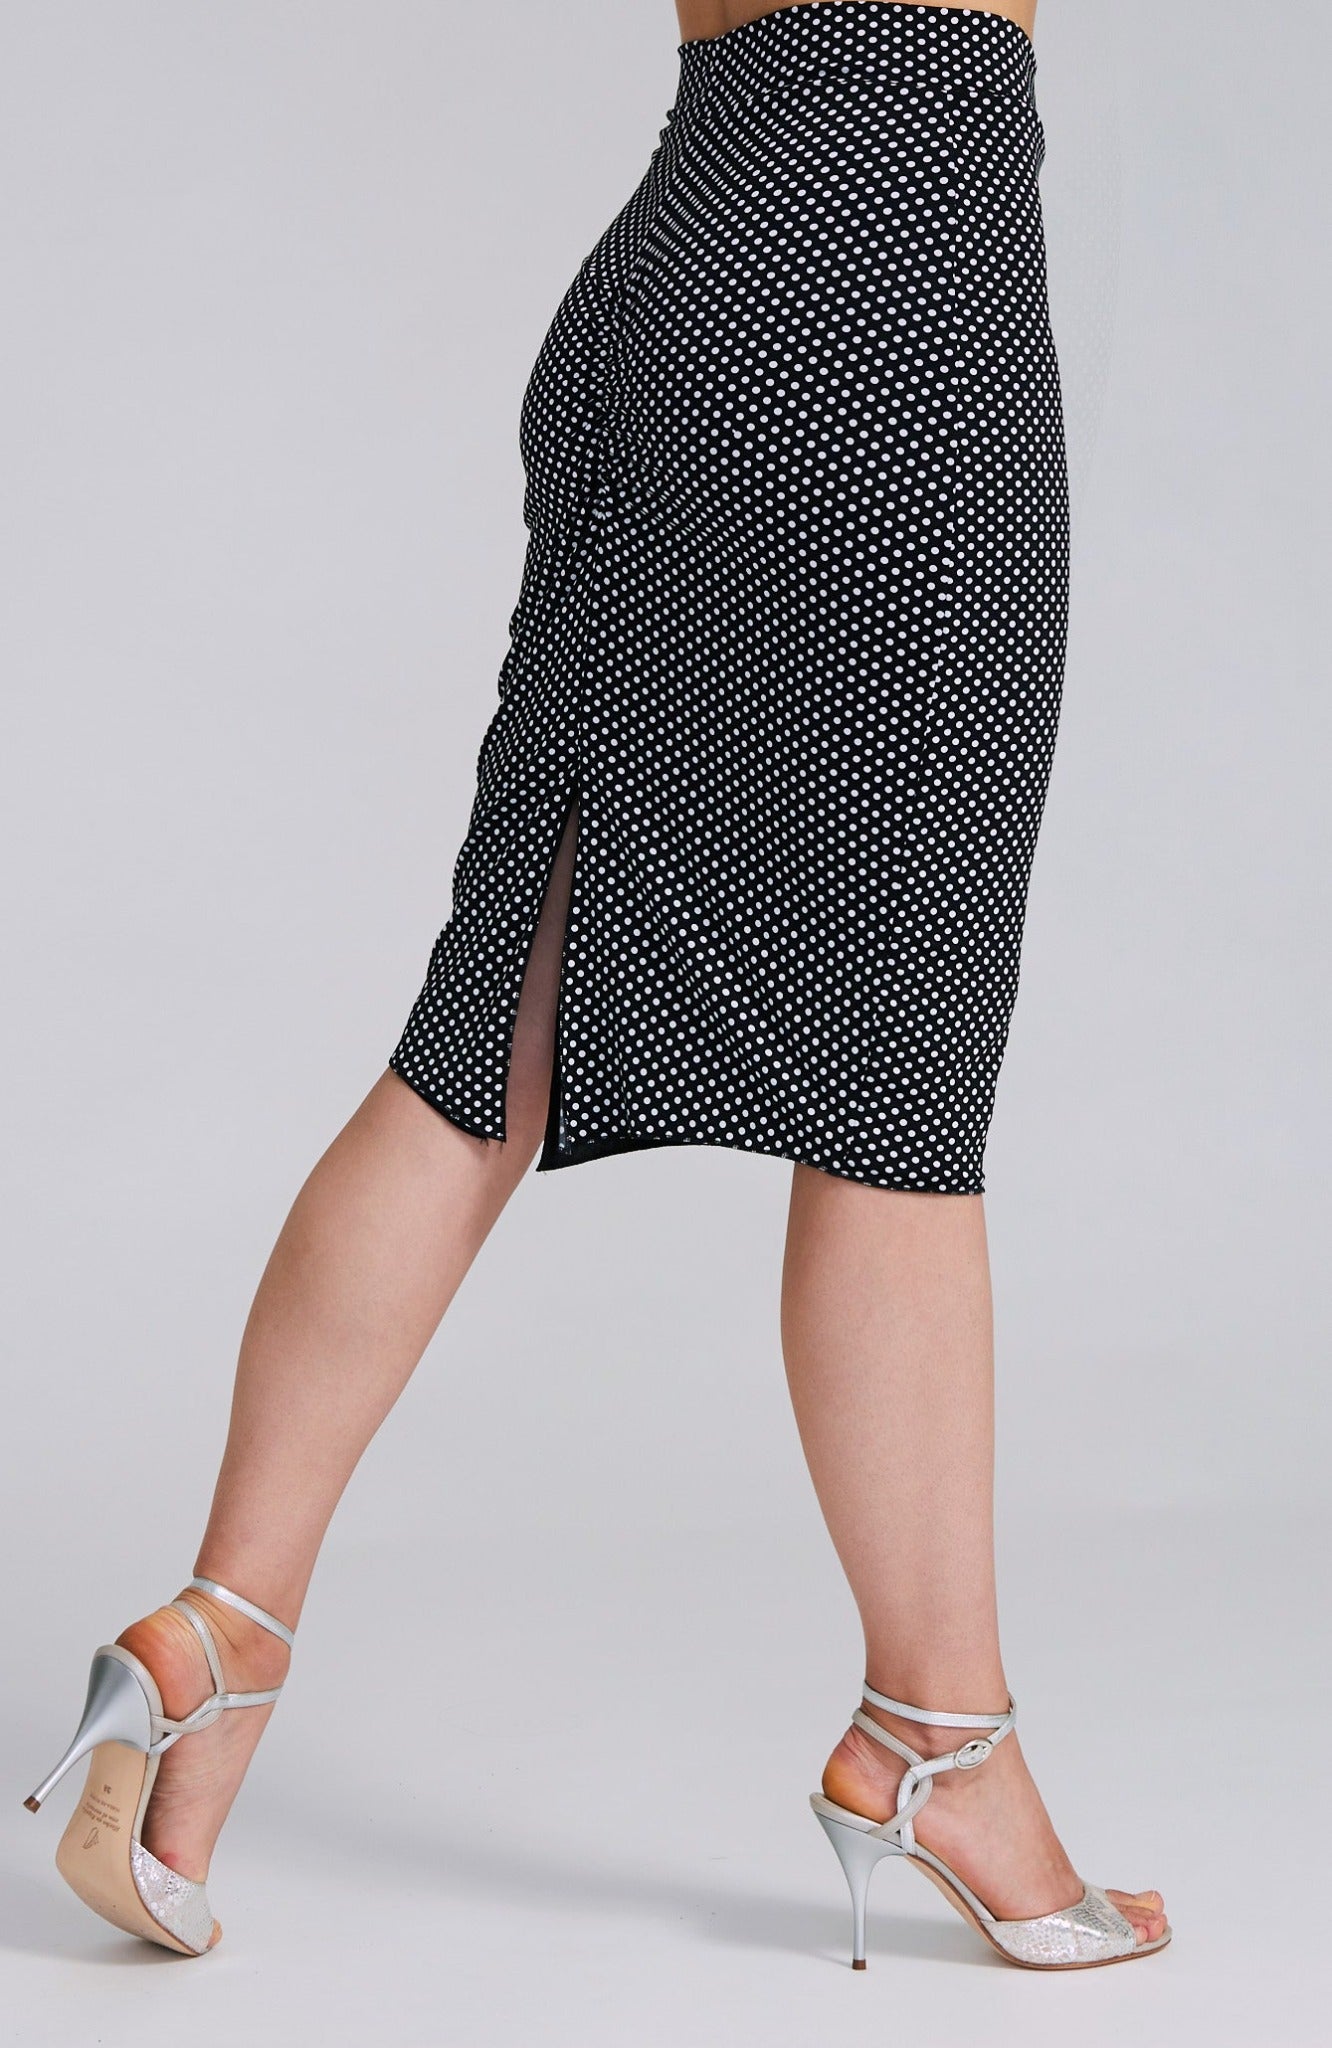 CLARA - Reversible Pencil Skirt in Polka Dots / Black